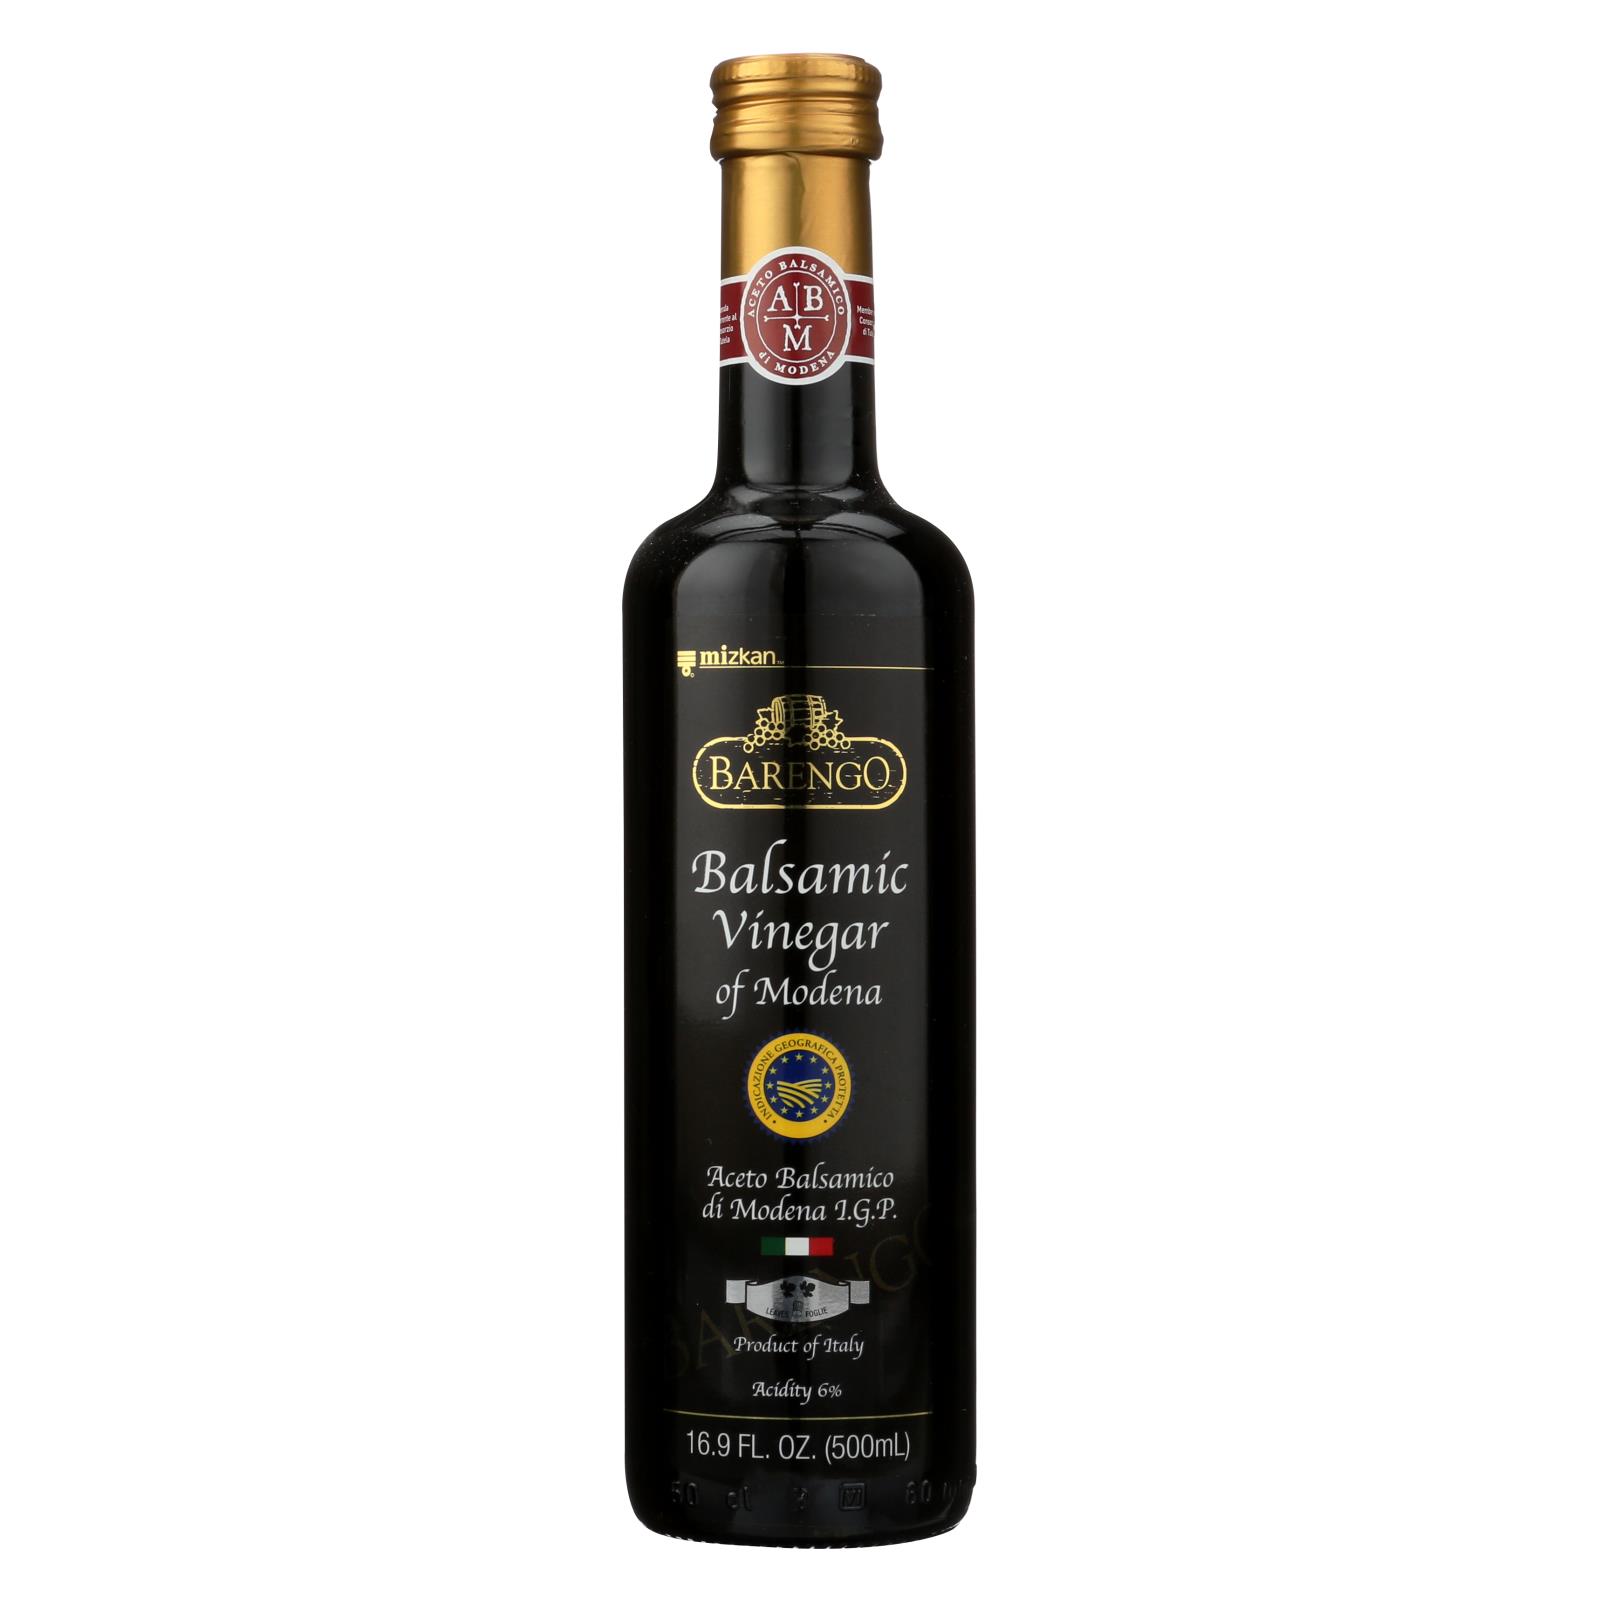 Barengo Balsamic Vinegar - 6개 묶음상품 - 16.9 fl oz.